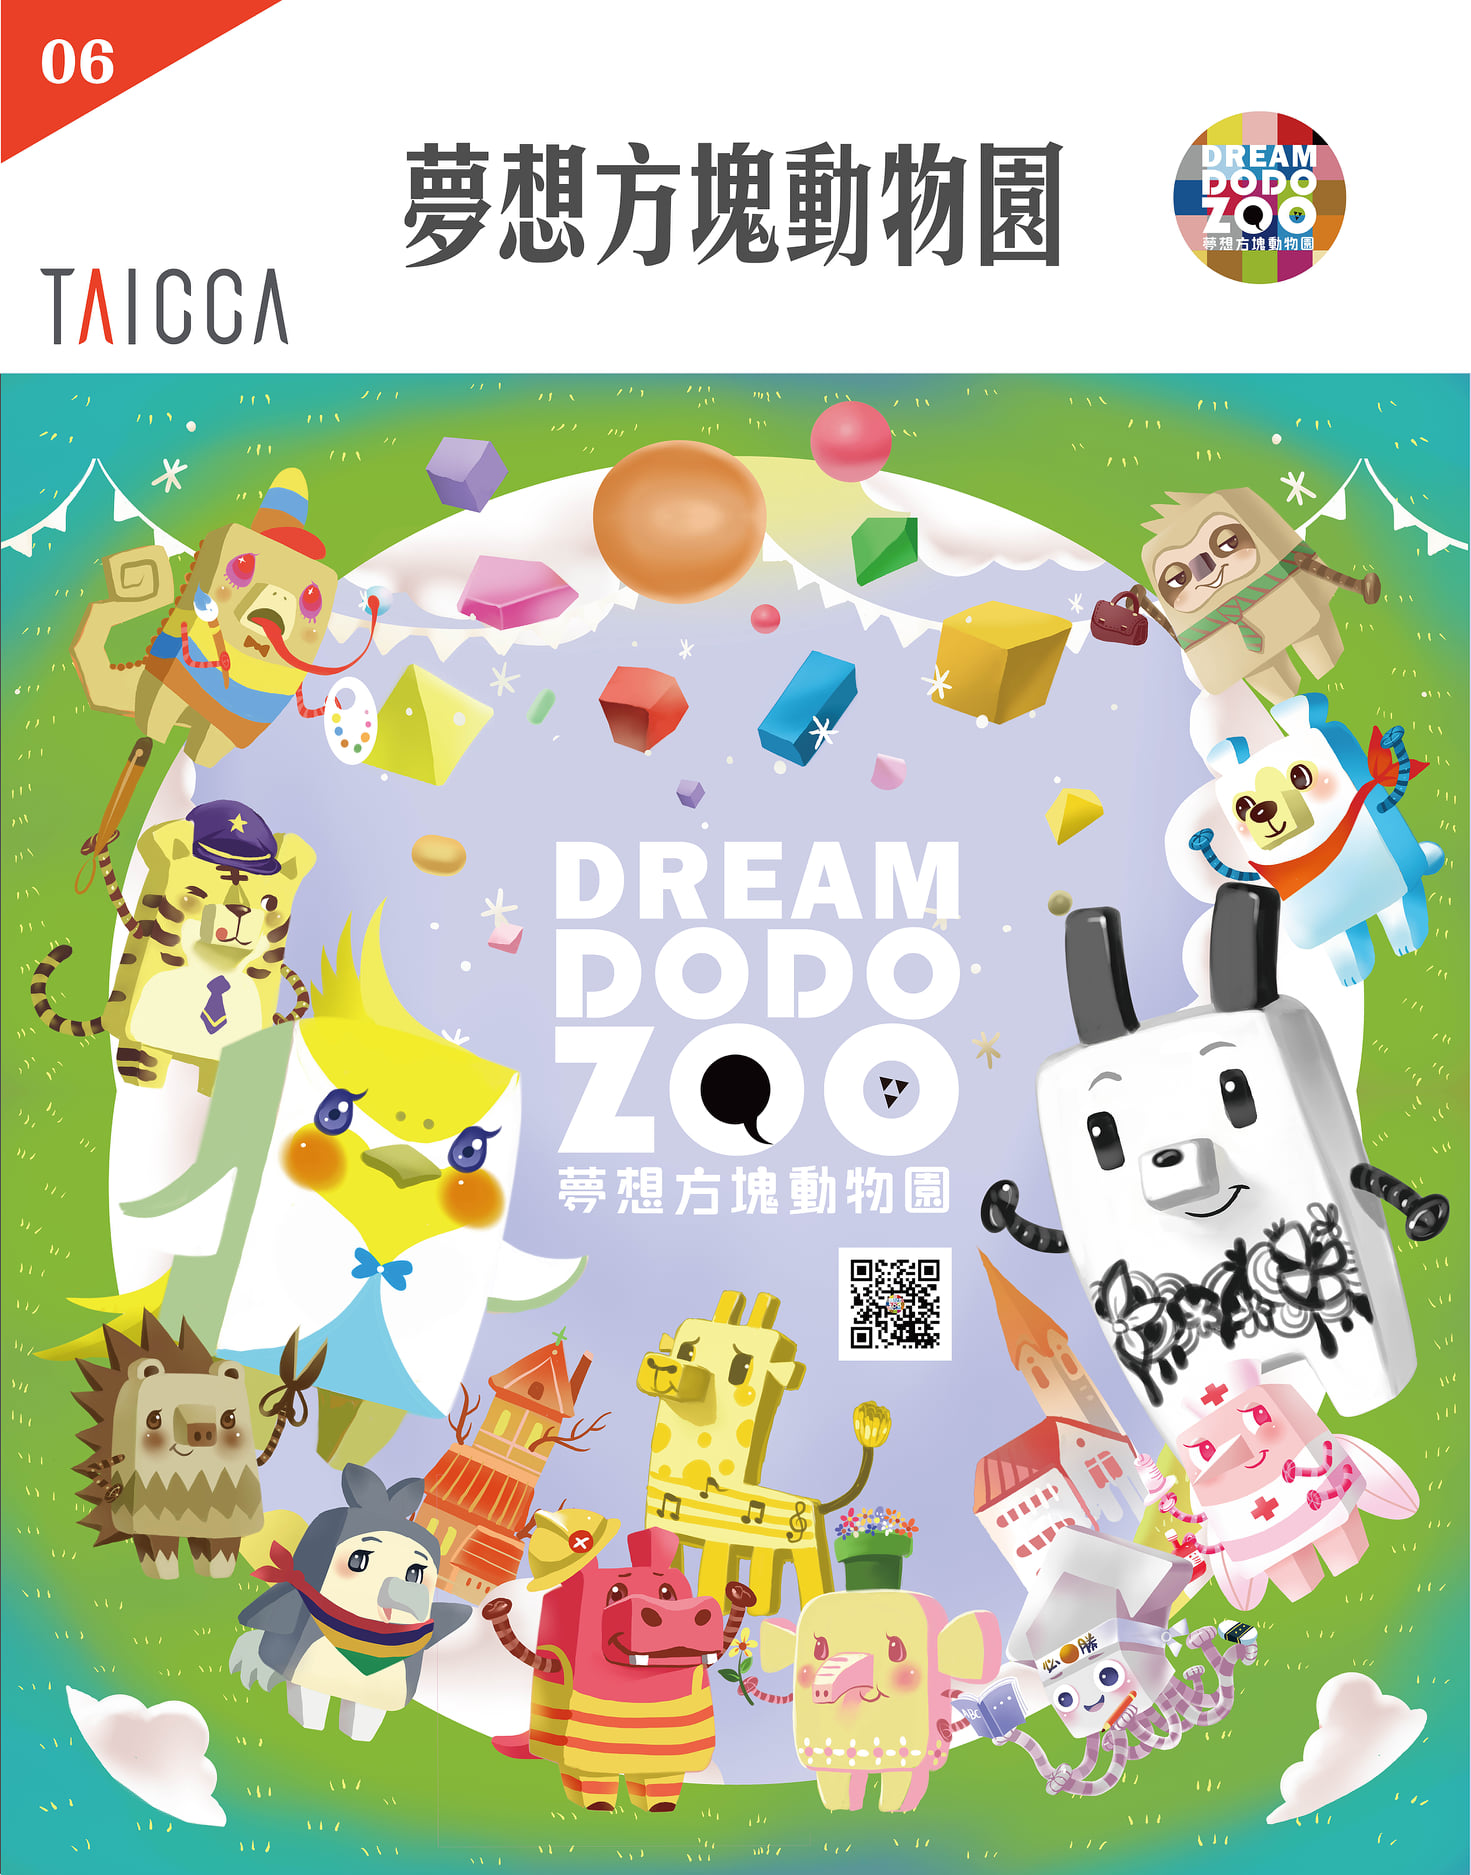 ★【Dream DODO ZOO夢想方塊動物園 】【CWT-56】(台大場)-hoelex浩理斯.jpg